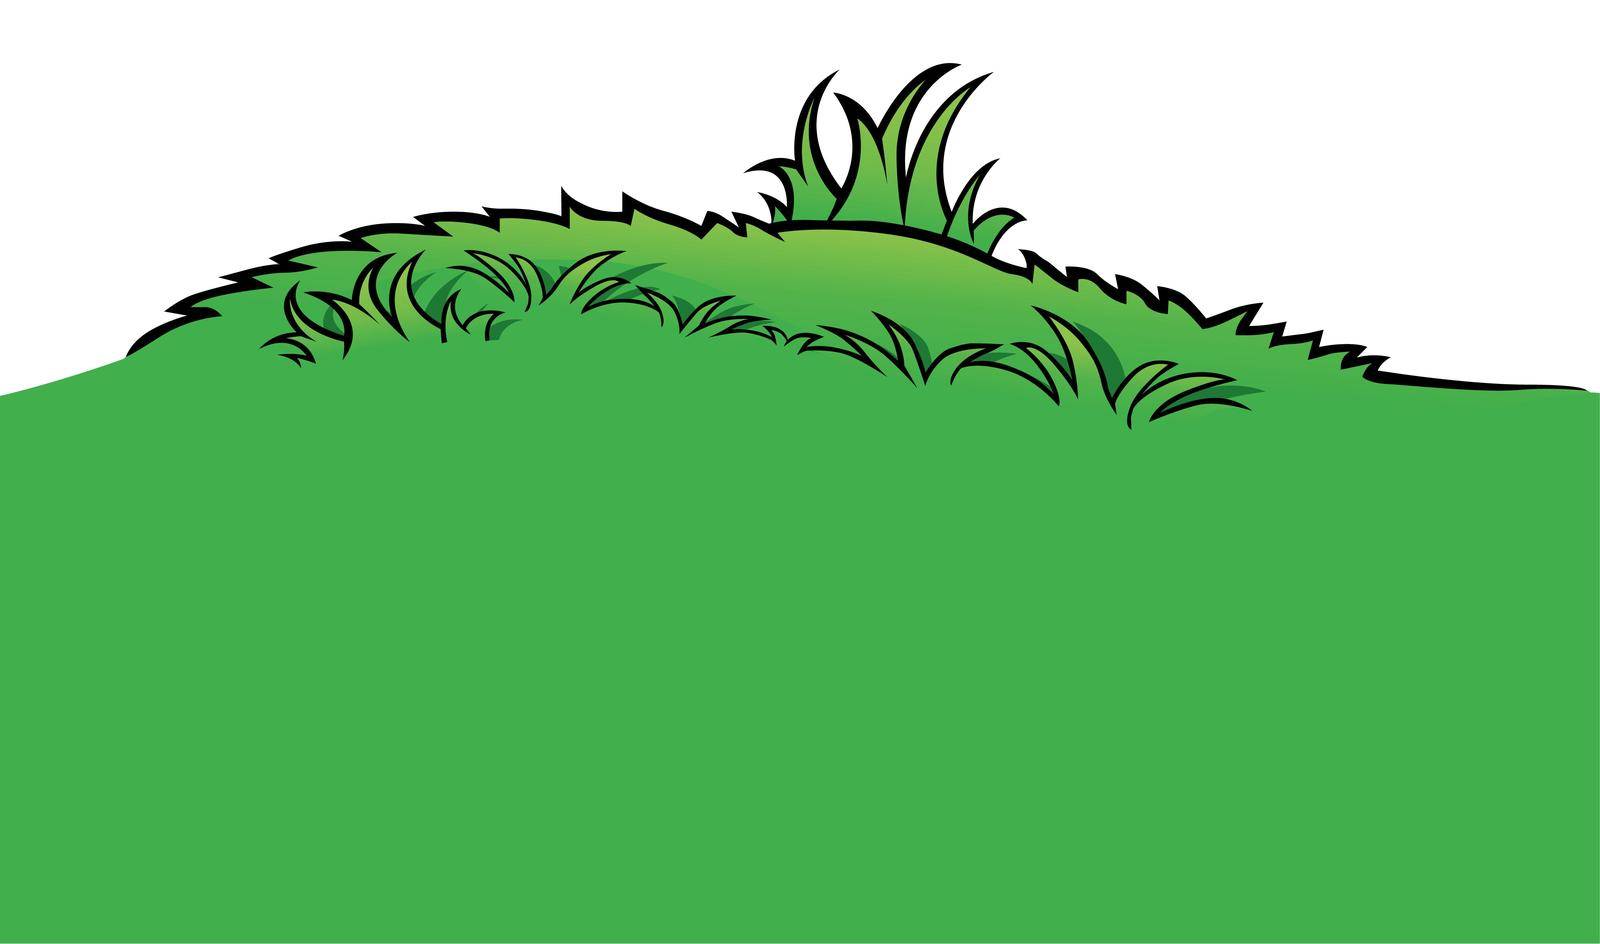 Green Grassland by illustratorCZ